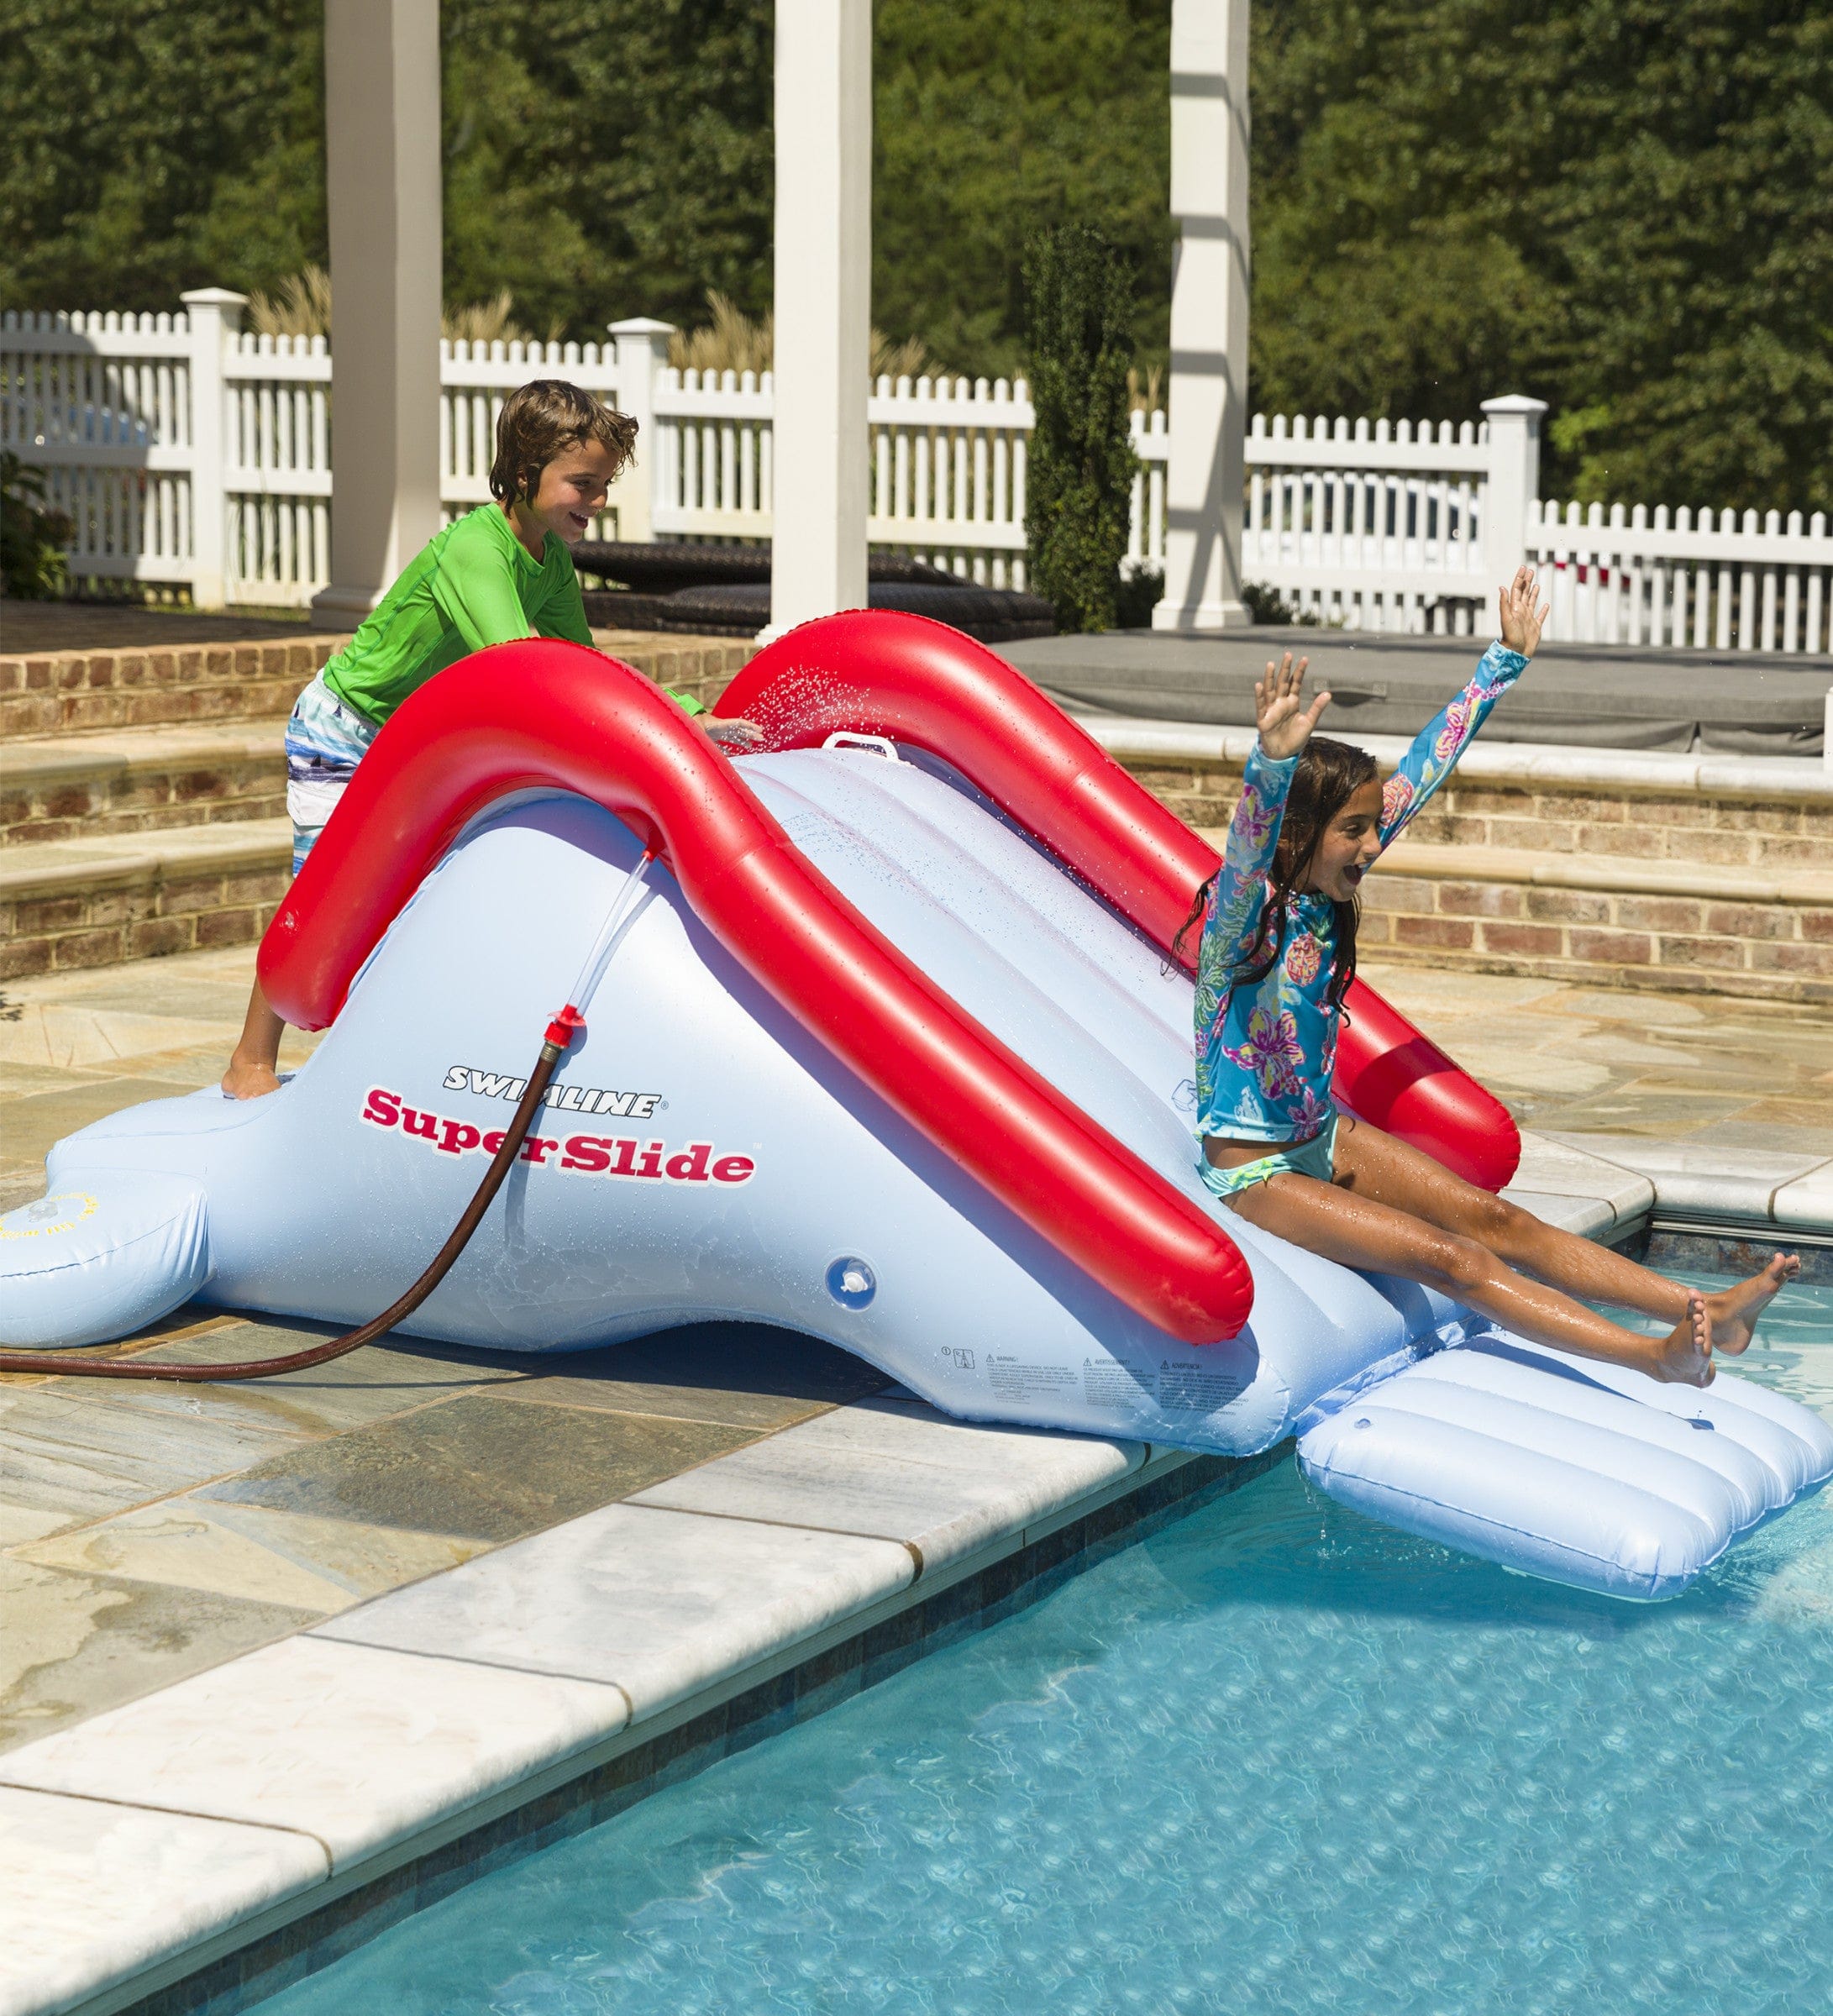 Inflatable Super Pool Water Slide – HearthSong